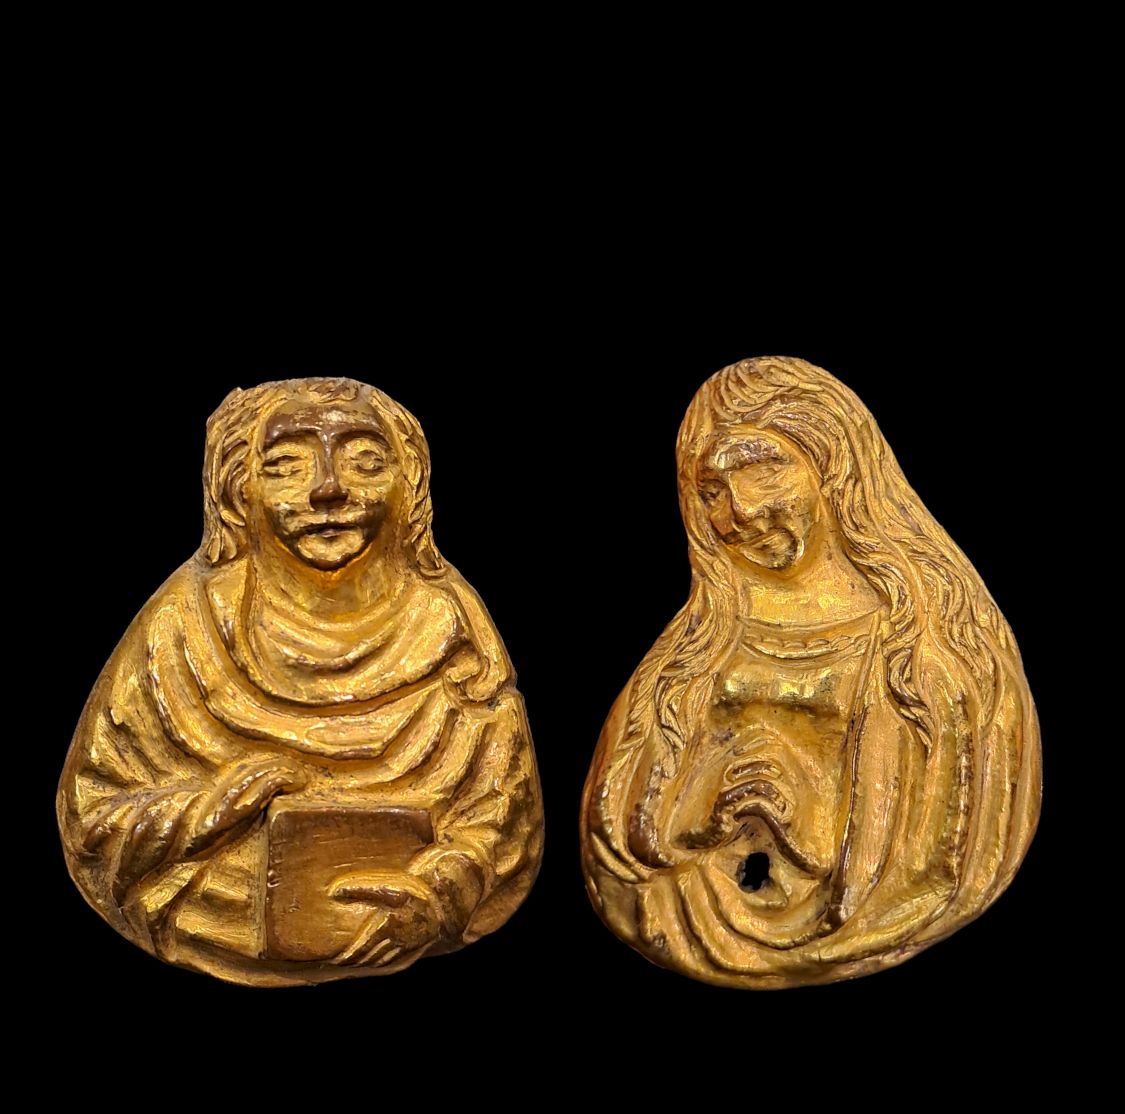 Null 两个镀金压花的铜制十字架，代表抹大拉的玛丽和圣约翰的半身像。

意大利，15世纪初

高度：5.7厘米

基座

(镀金的轻微磨损)

 

圣约翰应&hellip;